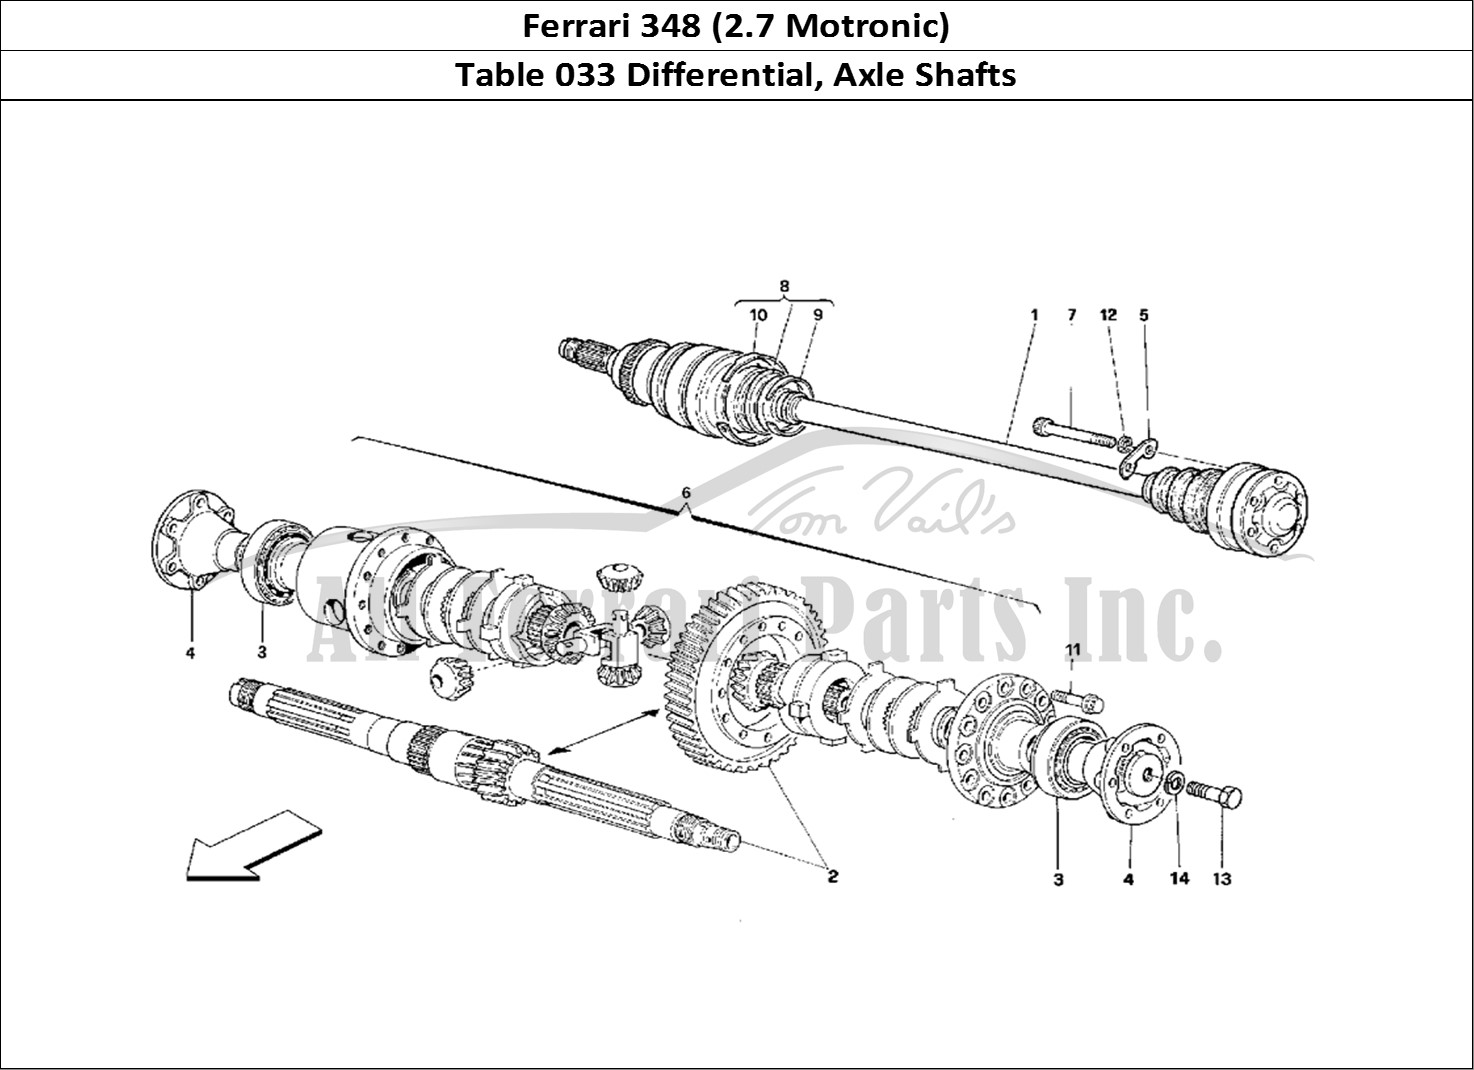 Ferrari Parts Ferrari 348 (2.7 Motronic) Page 033 Differential & Axle Shaft